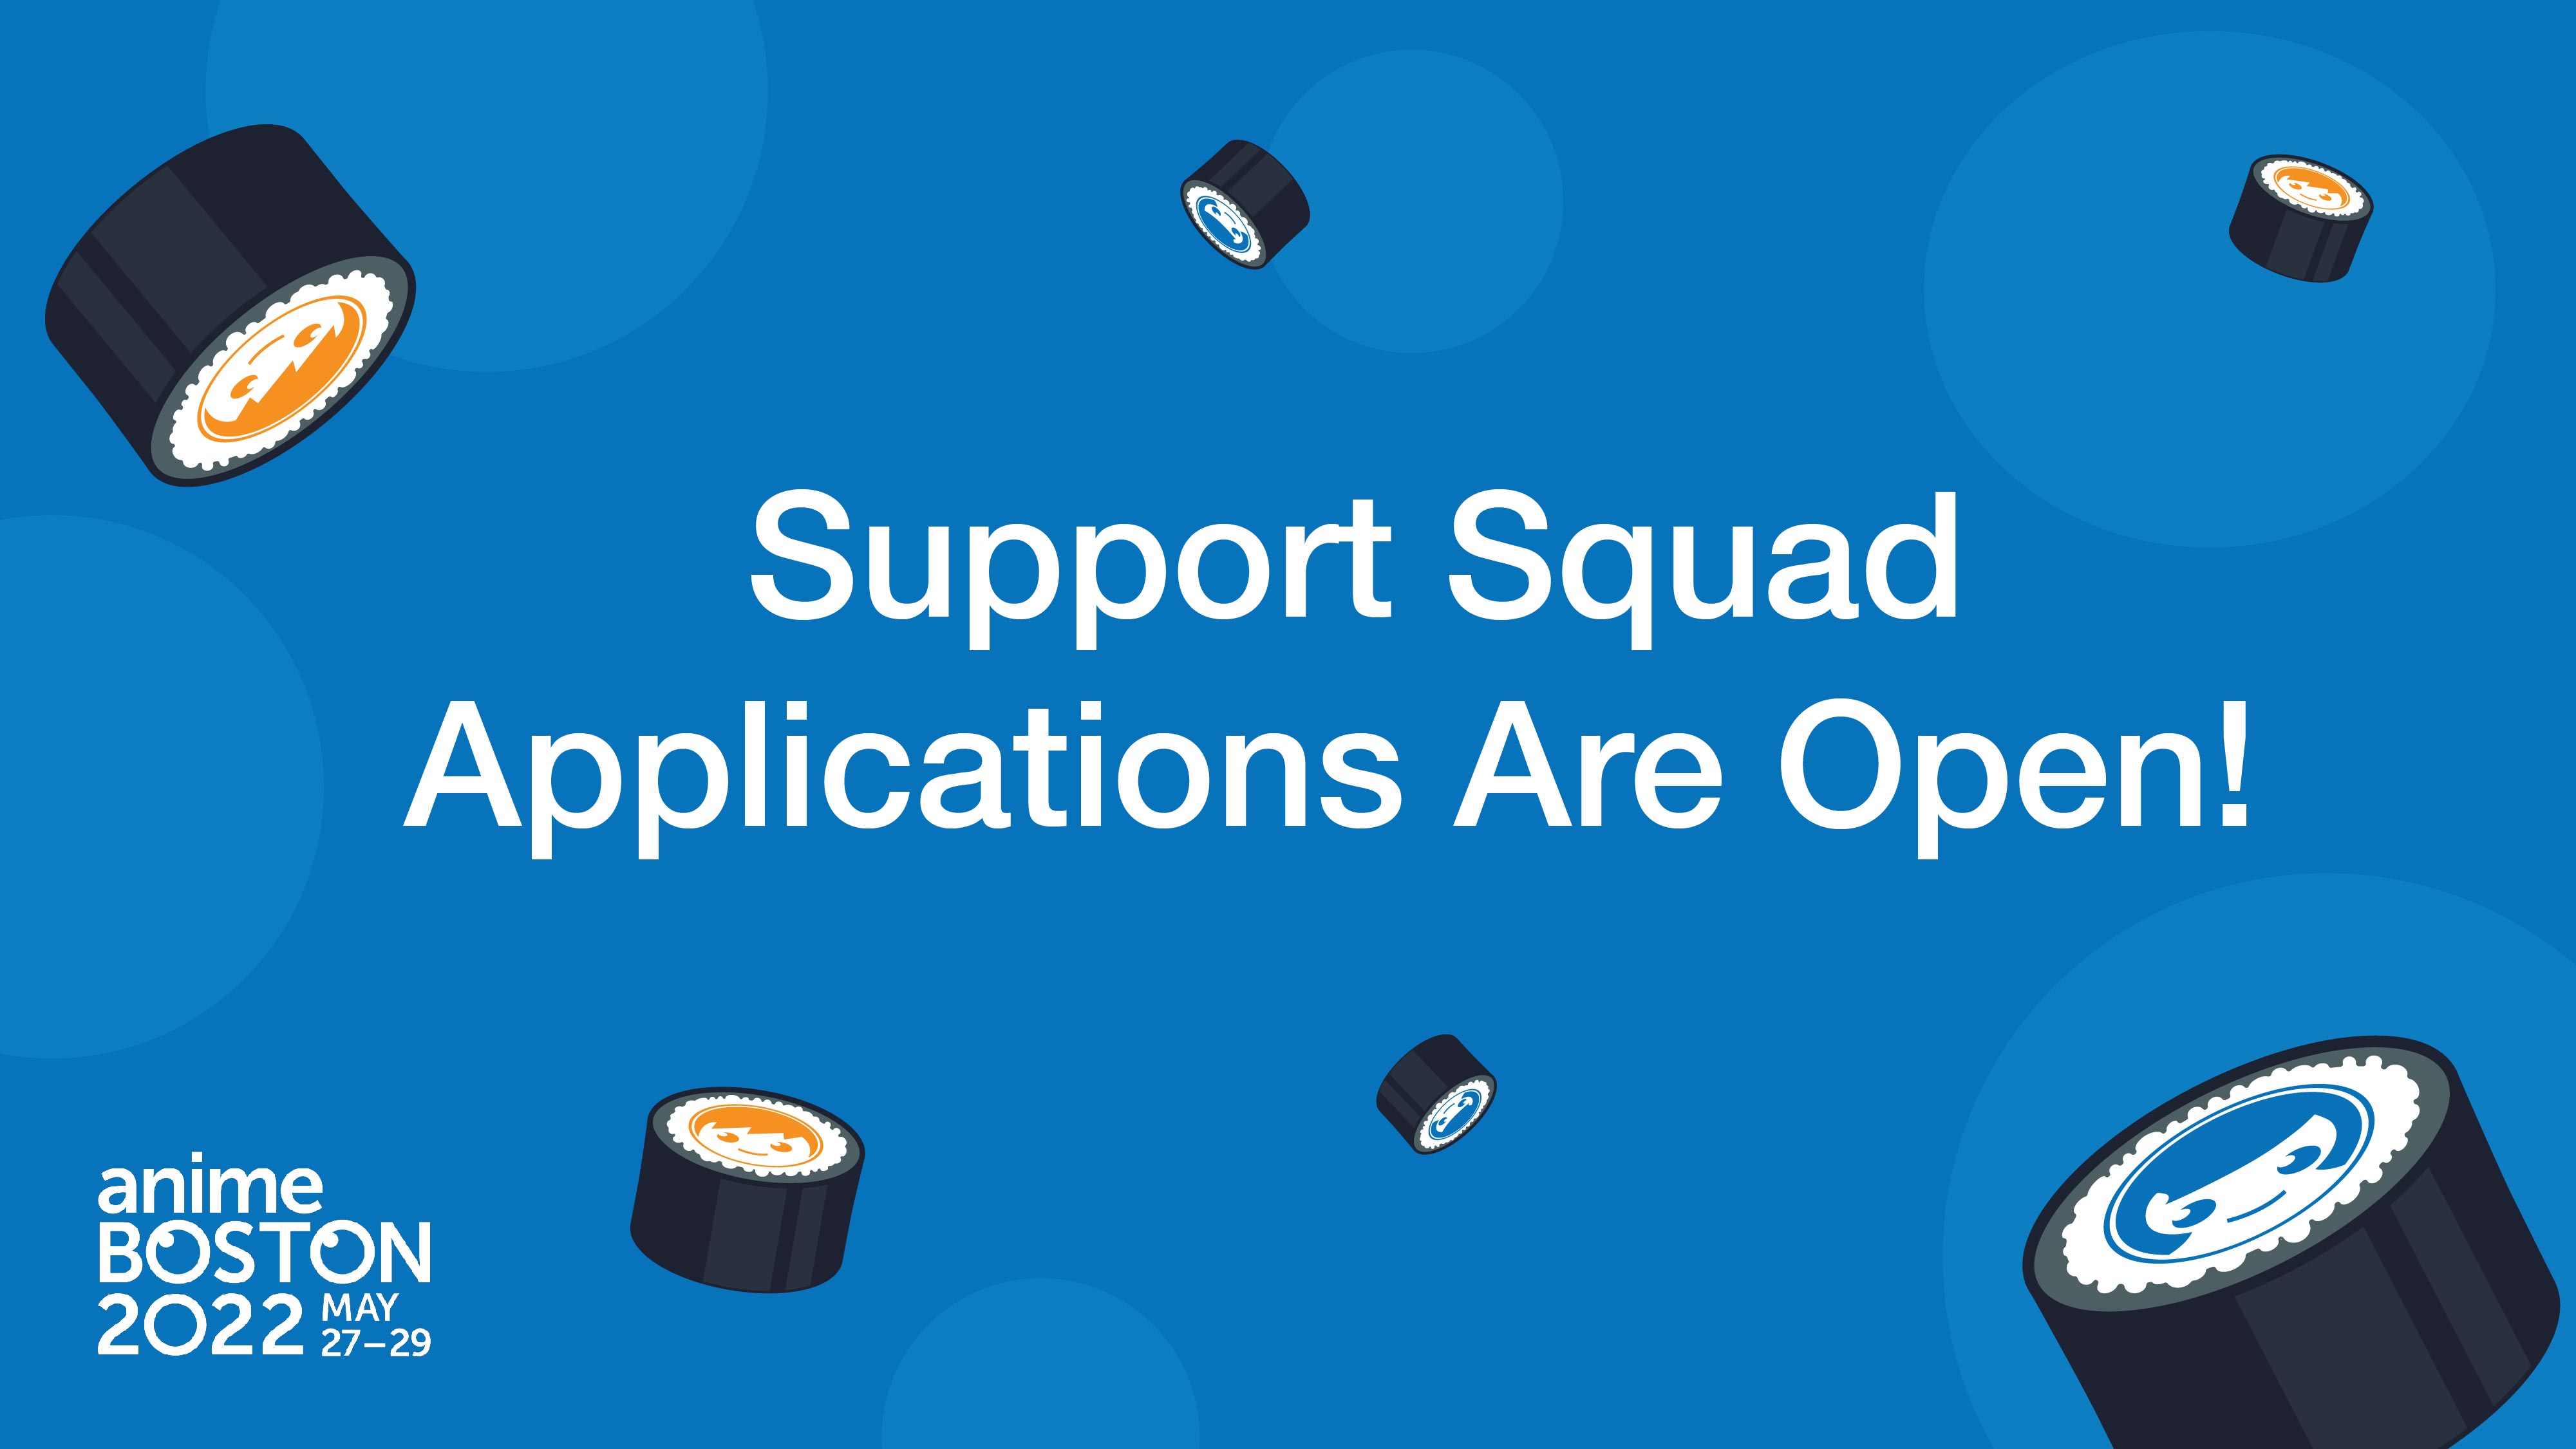 support squad announement2jpg-04.jpg